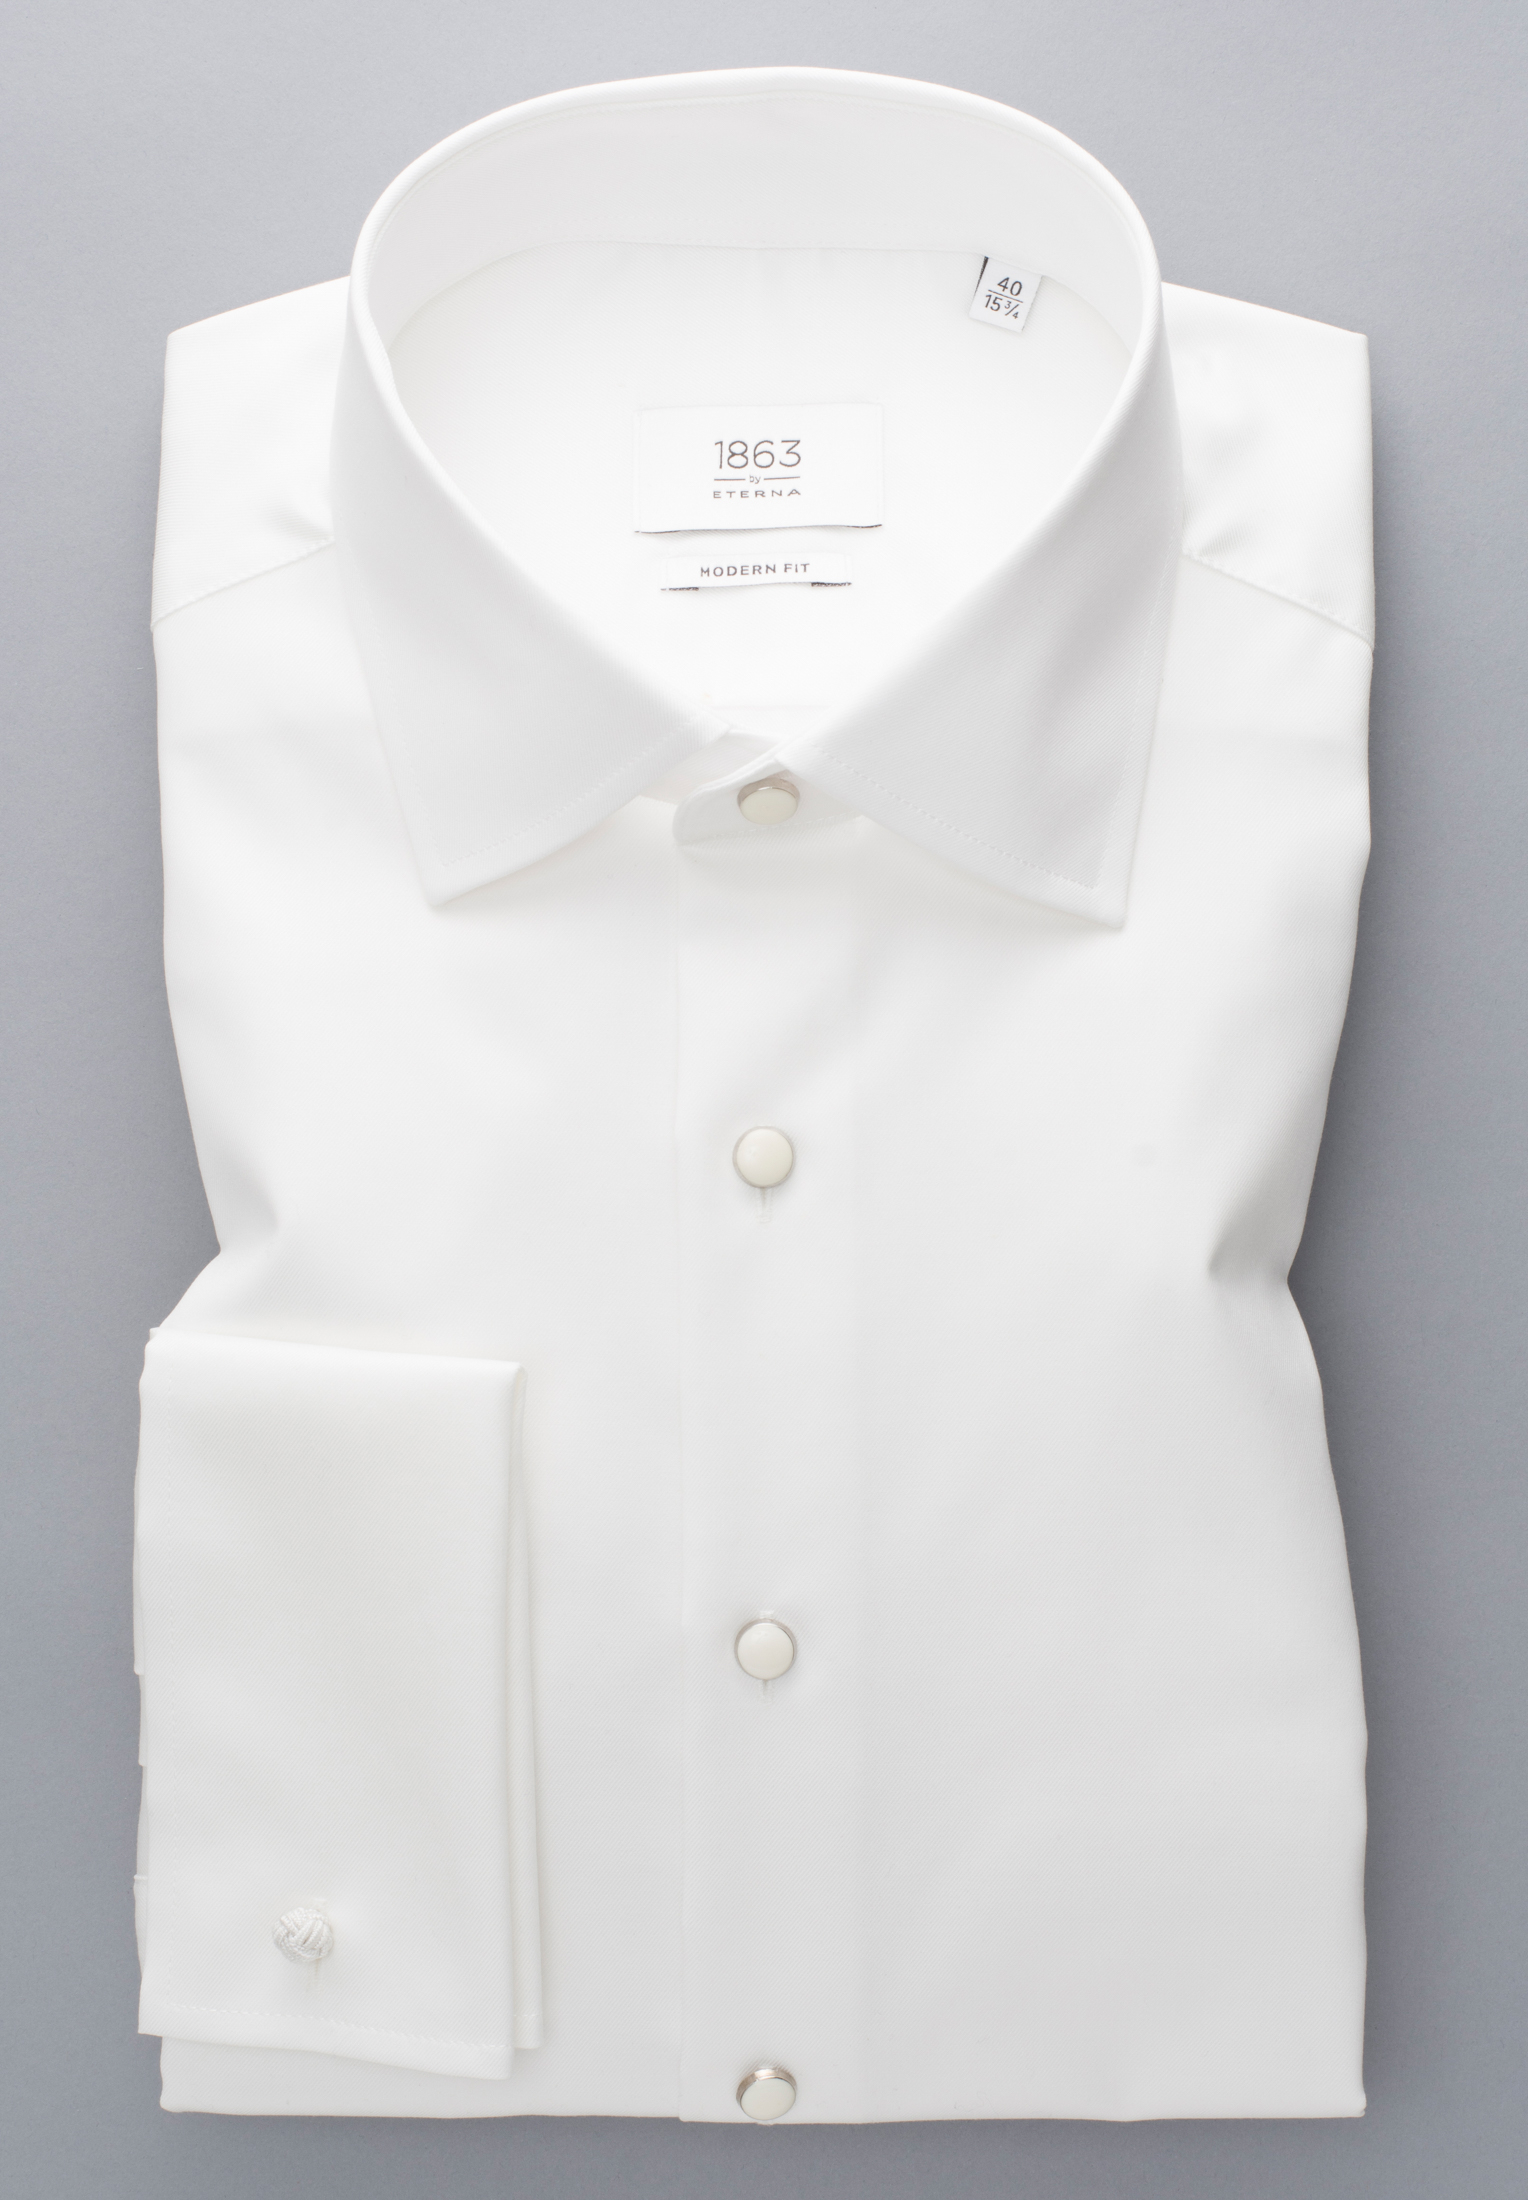 Shirt 42 beige FIT Langarm | unifarben MODERN | | beige Luxury 1SH11166-02-01-42-1/1 | in